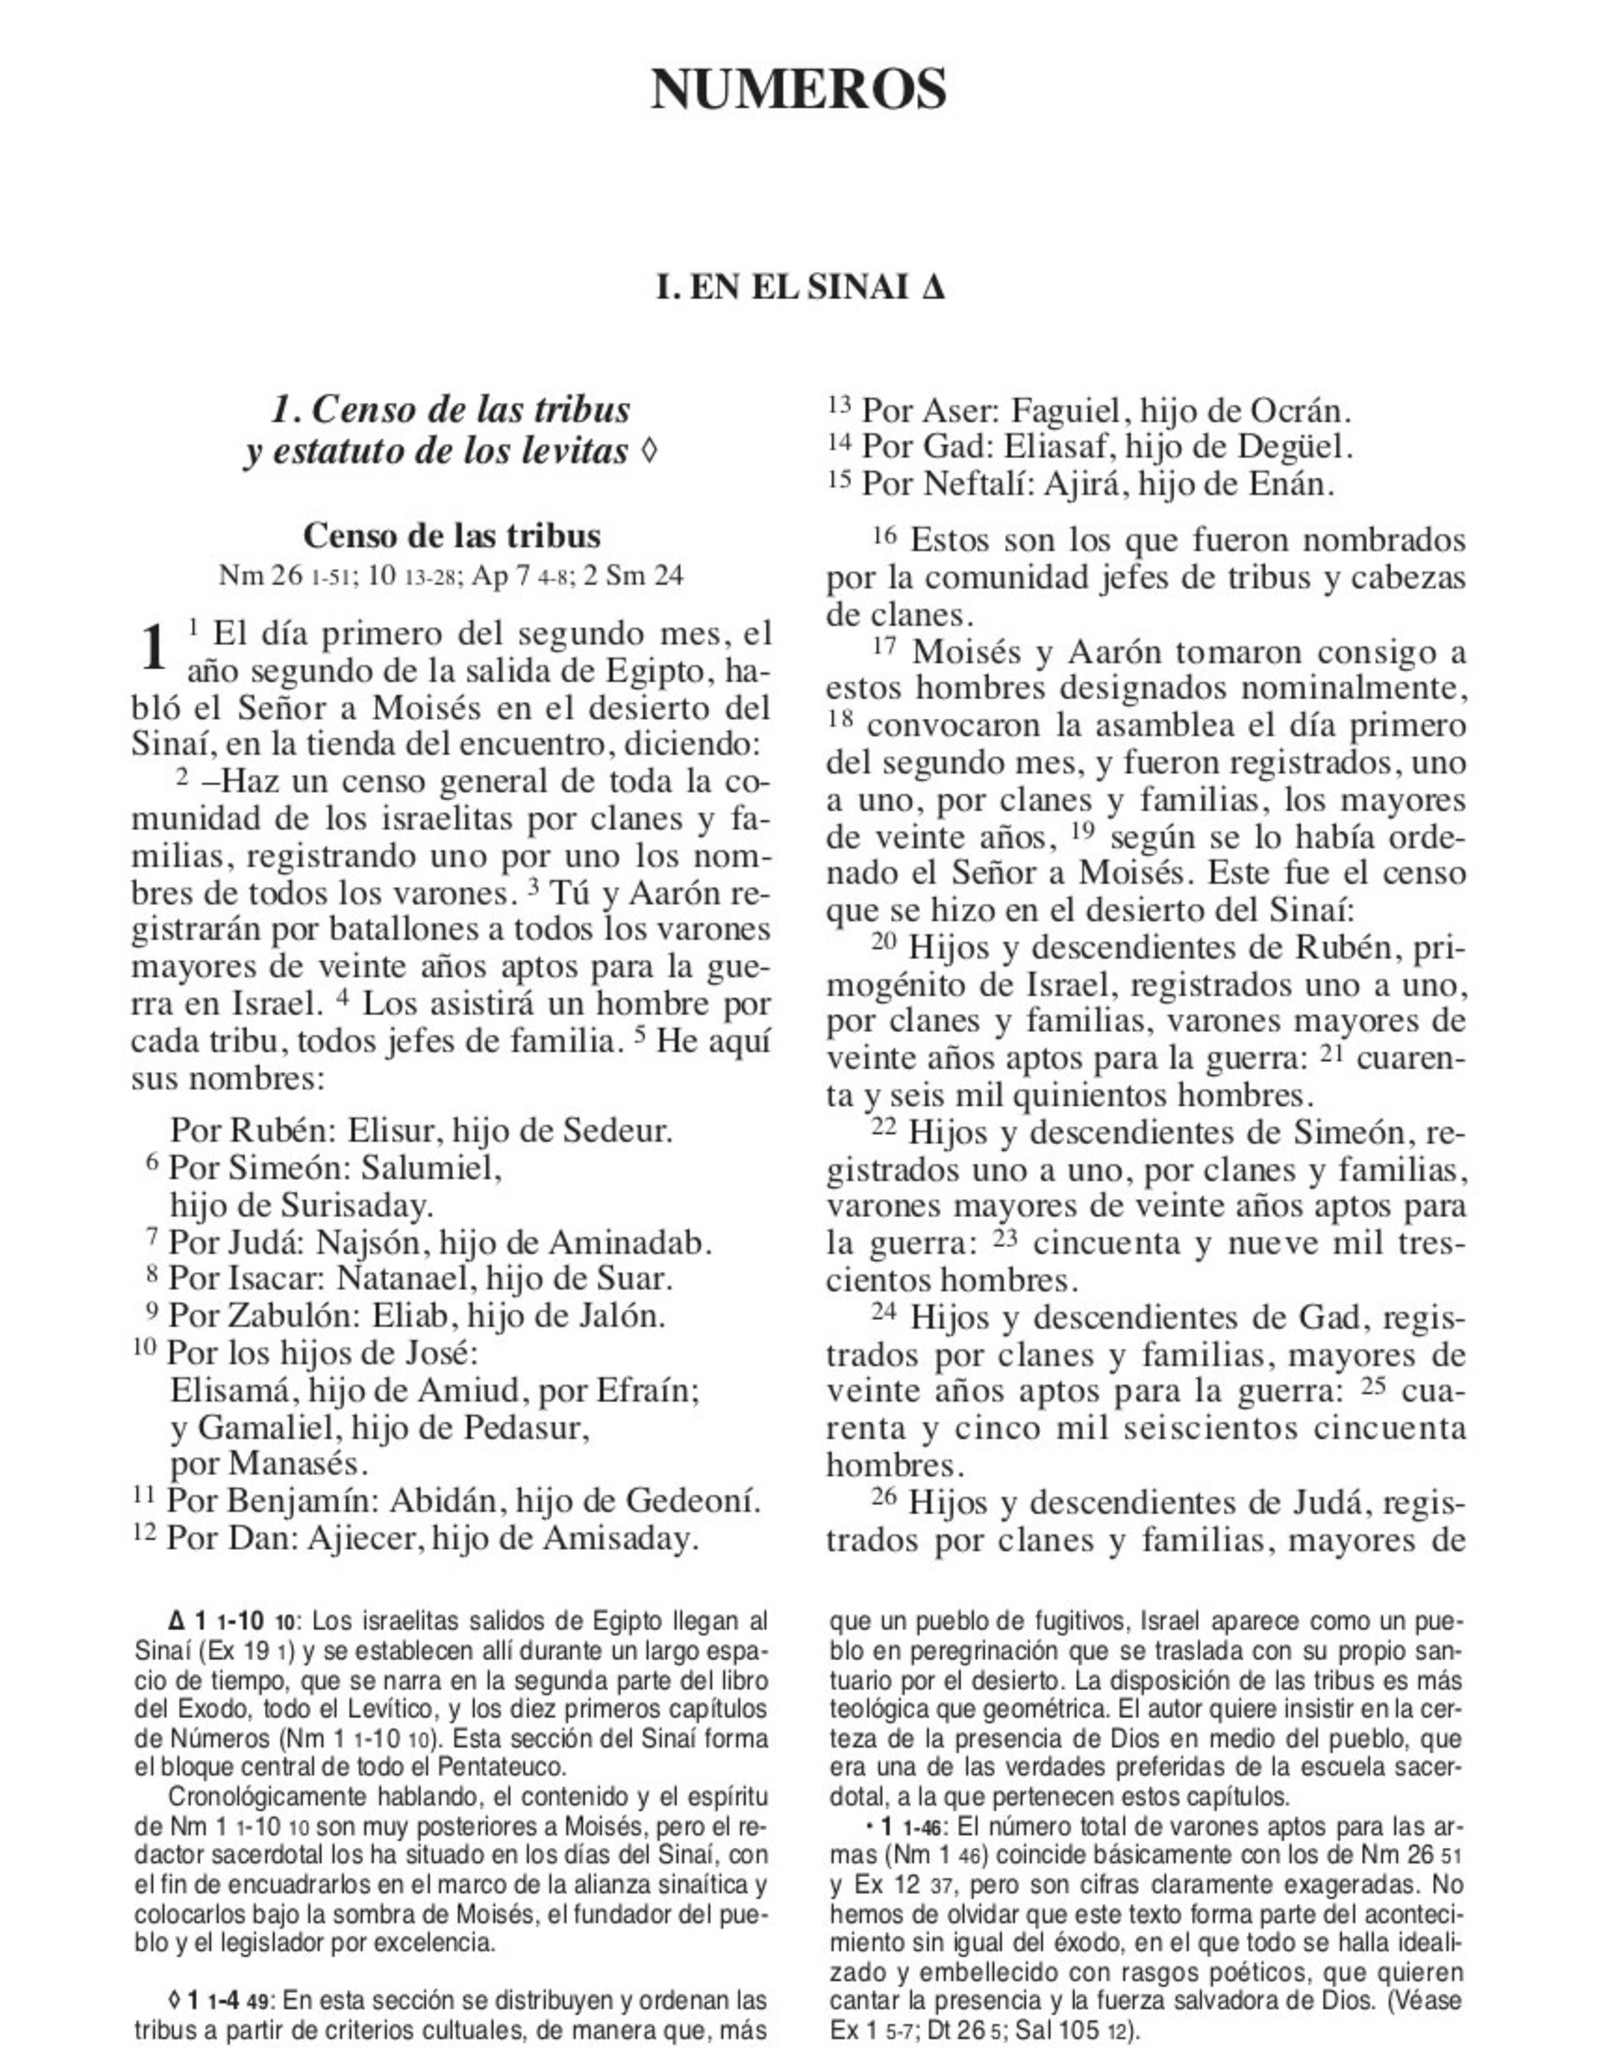 Catholic Book Publishing Biblia de America (Dura-Lux Cover)